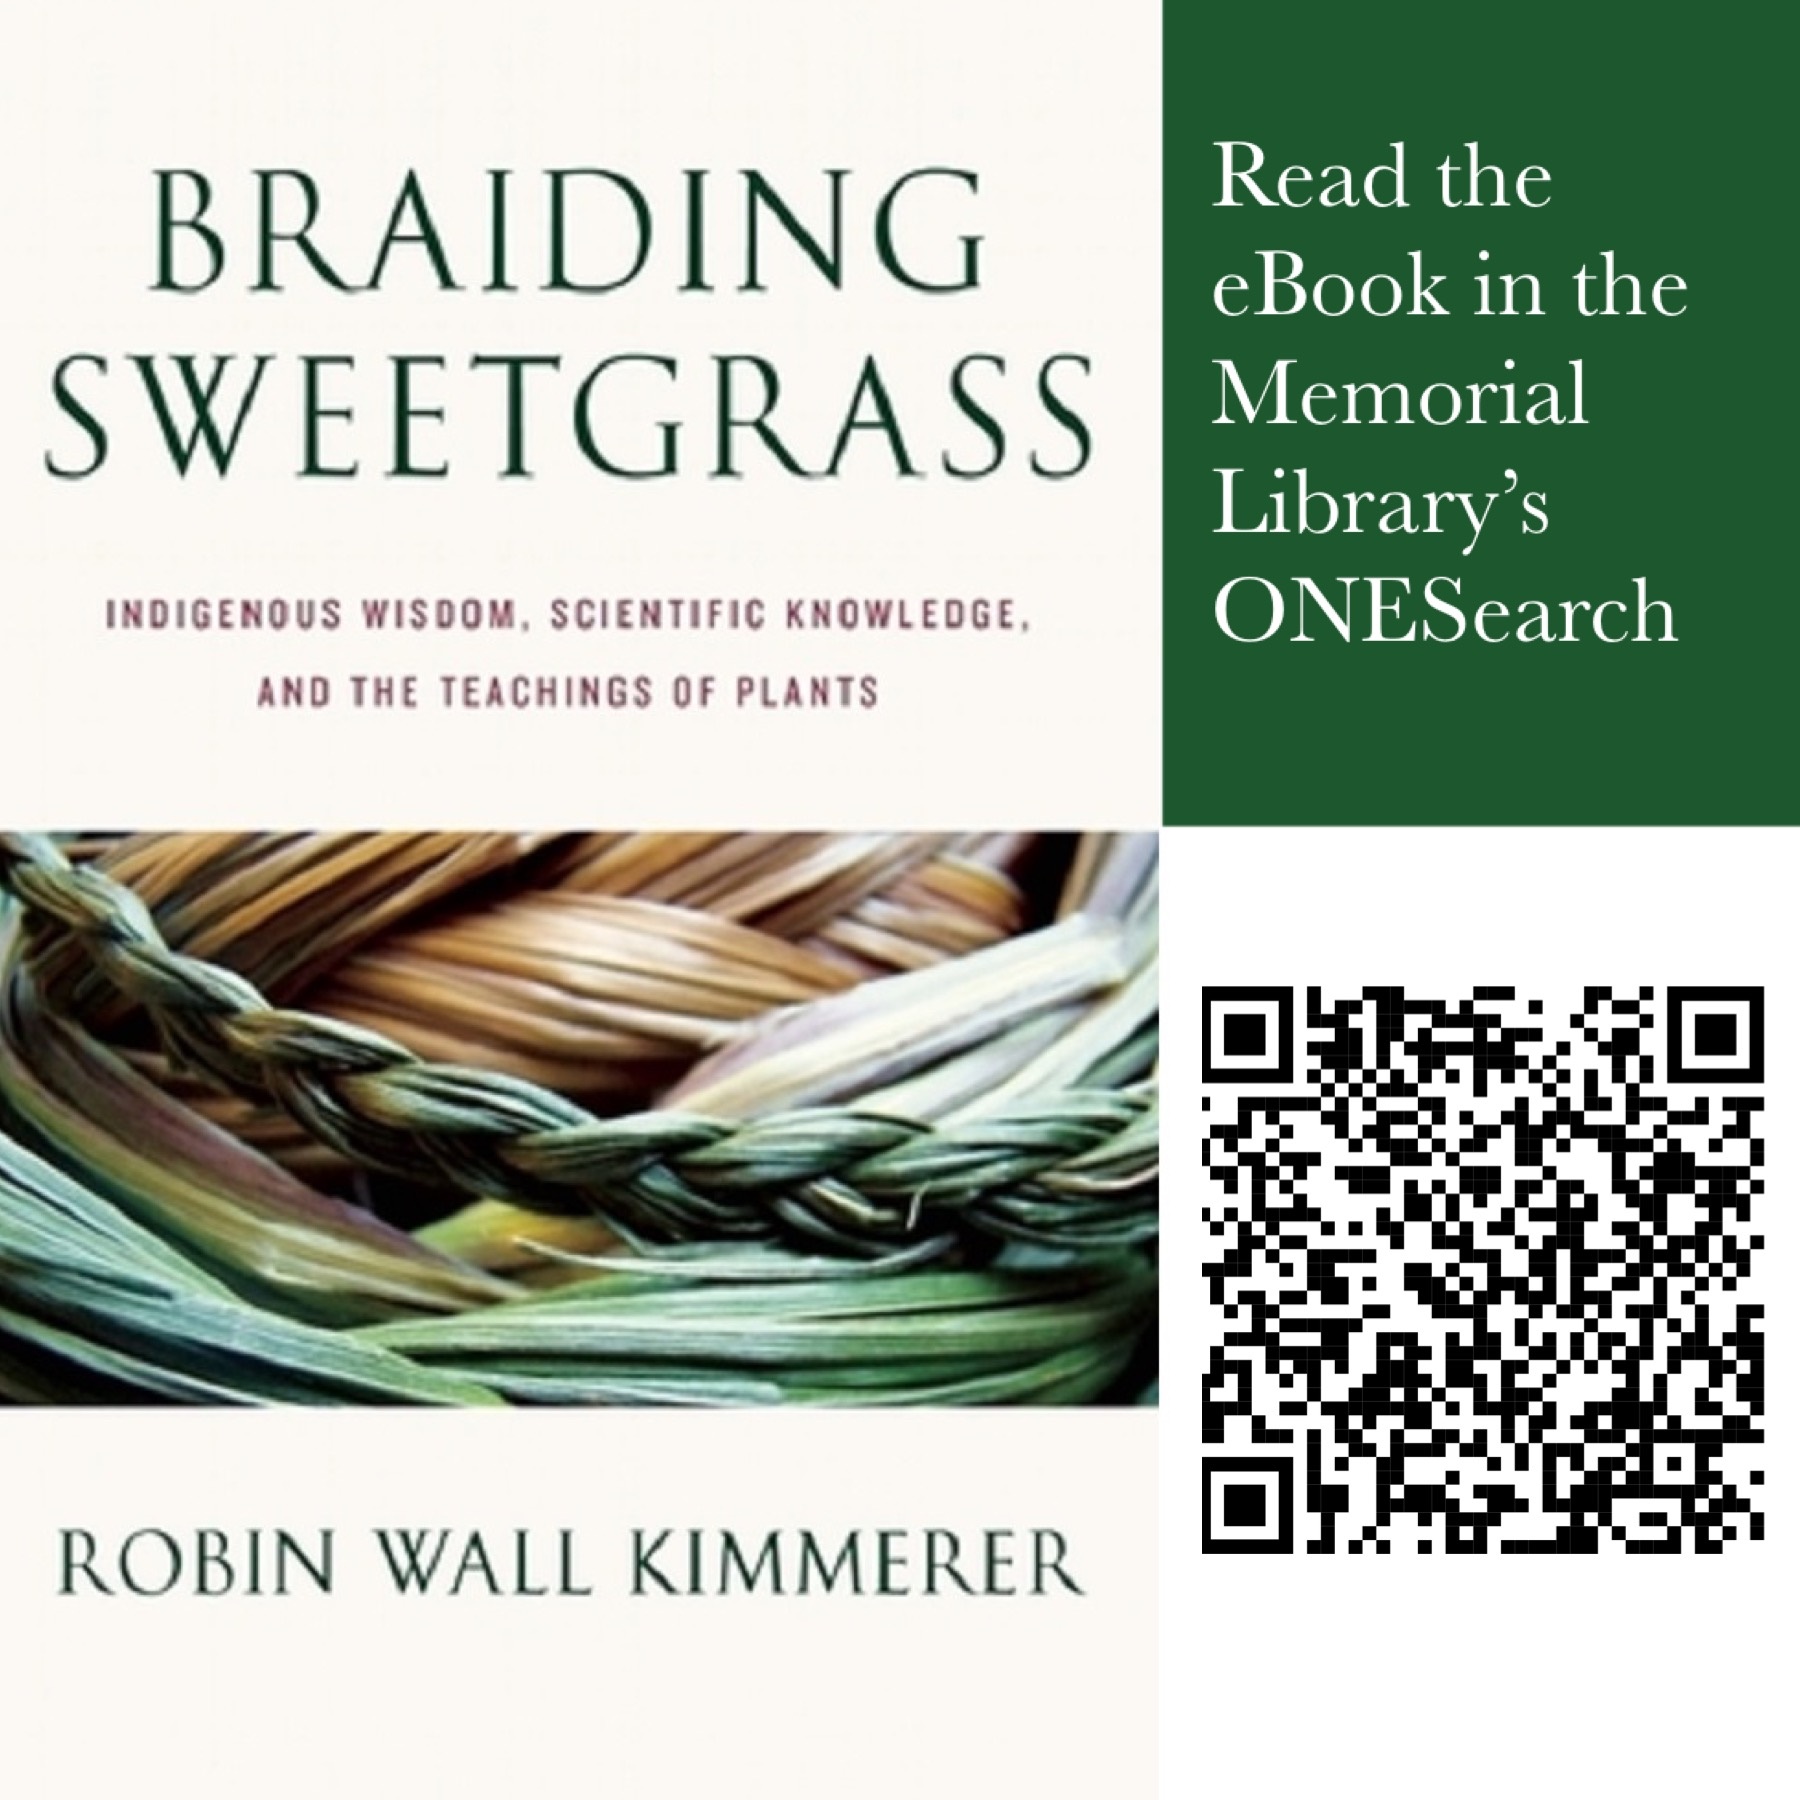 Access to Braiding Sweetgrass